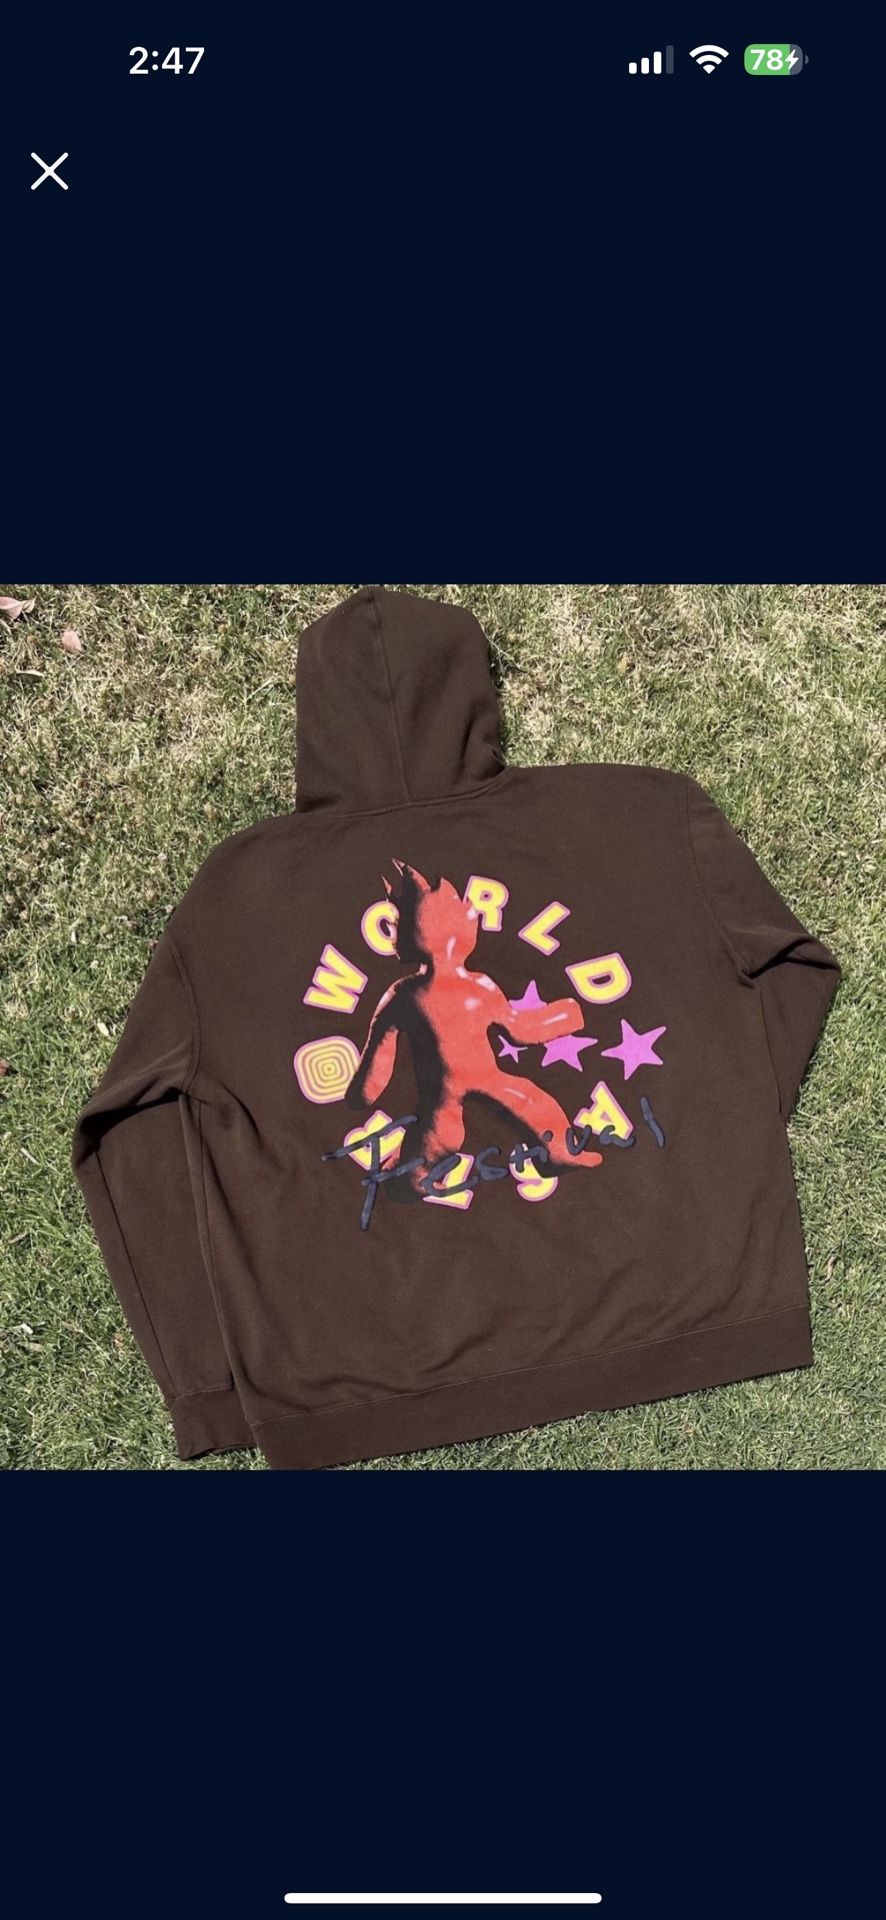 Astro world hoodie